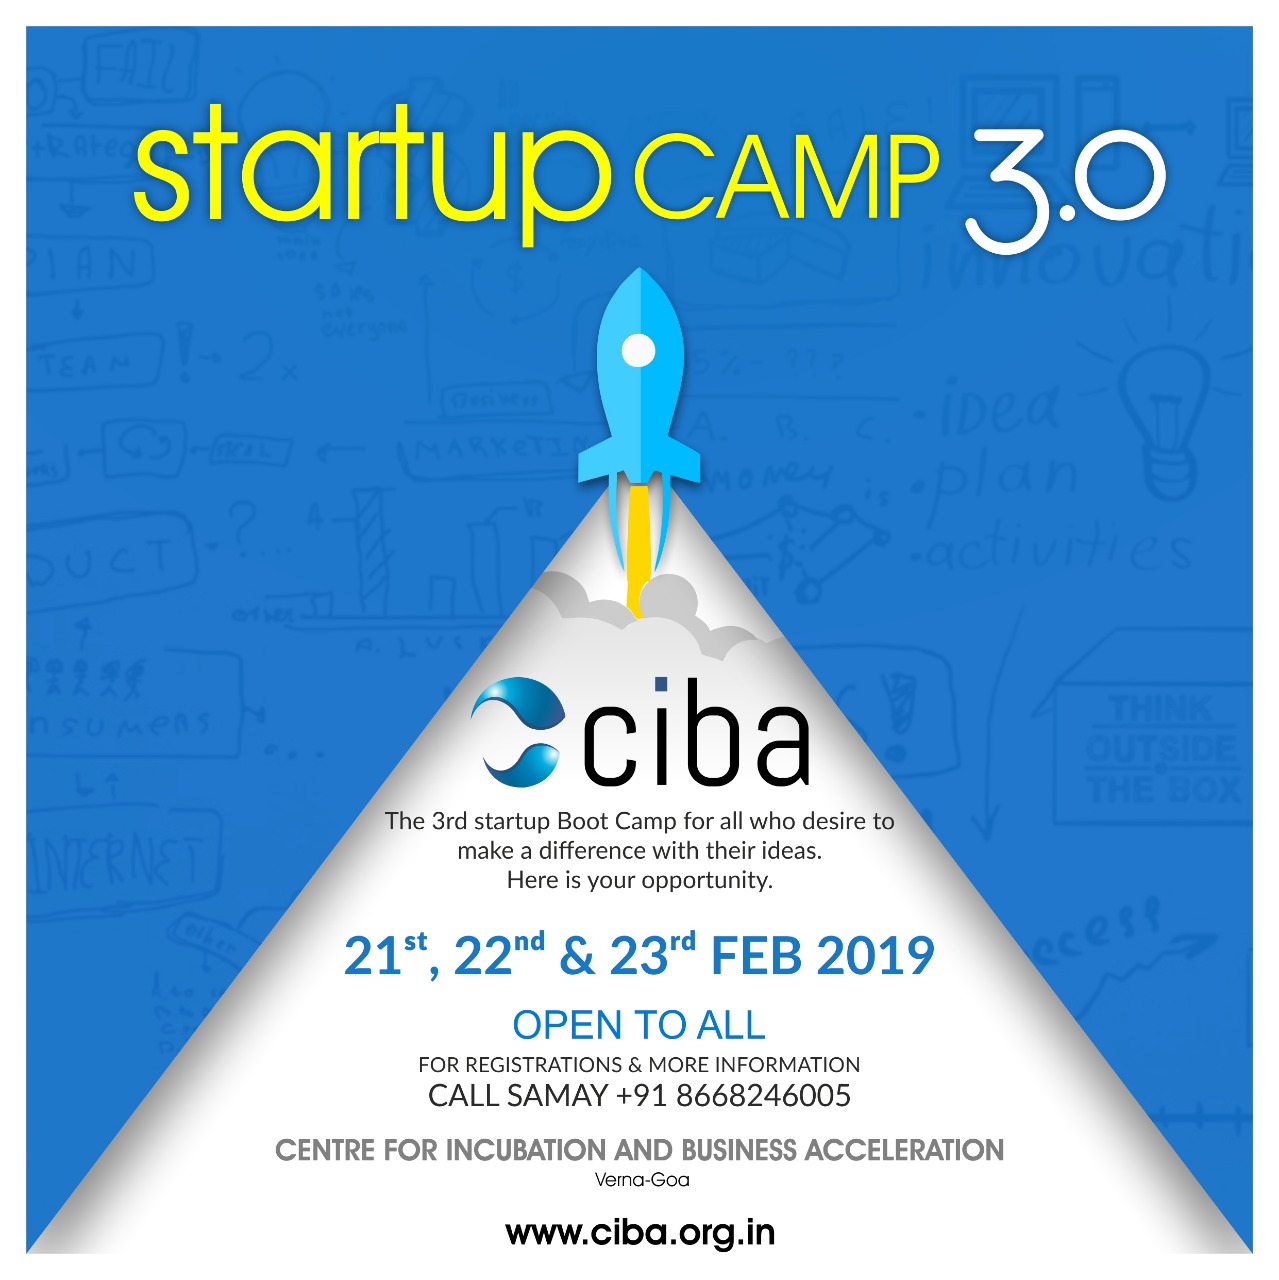 ciba-Startup Camp 3.0